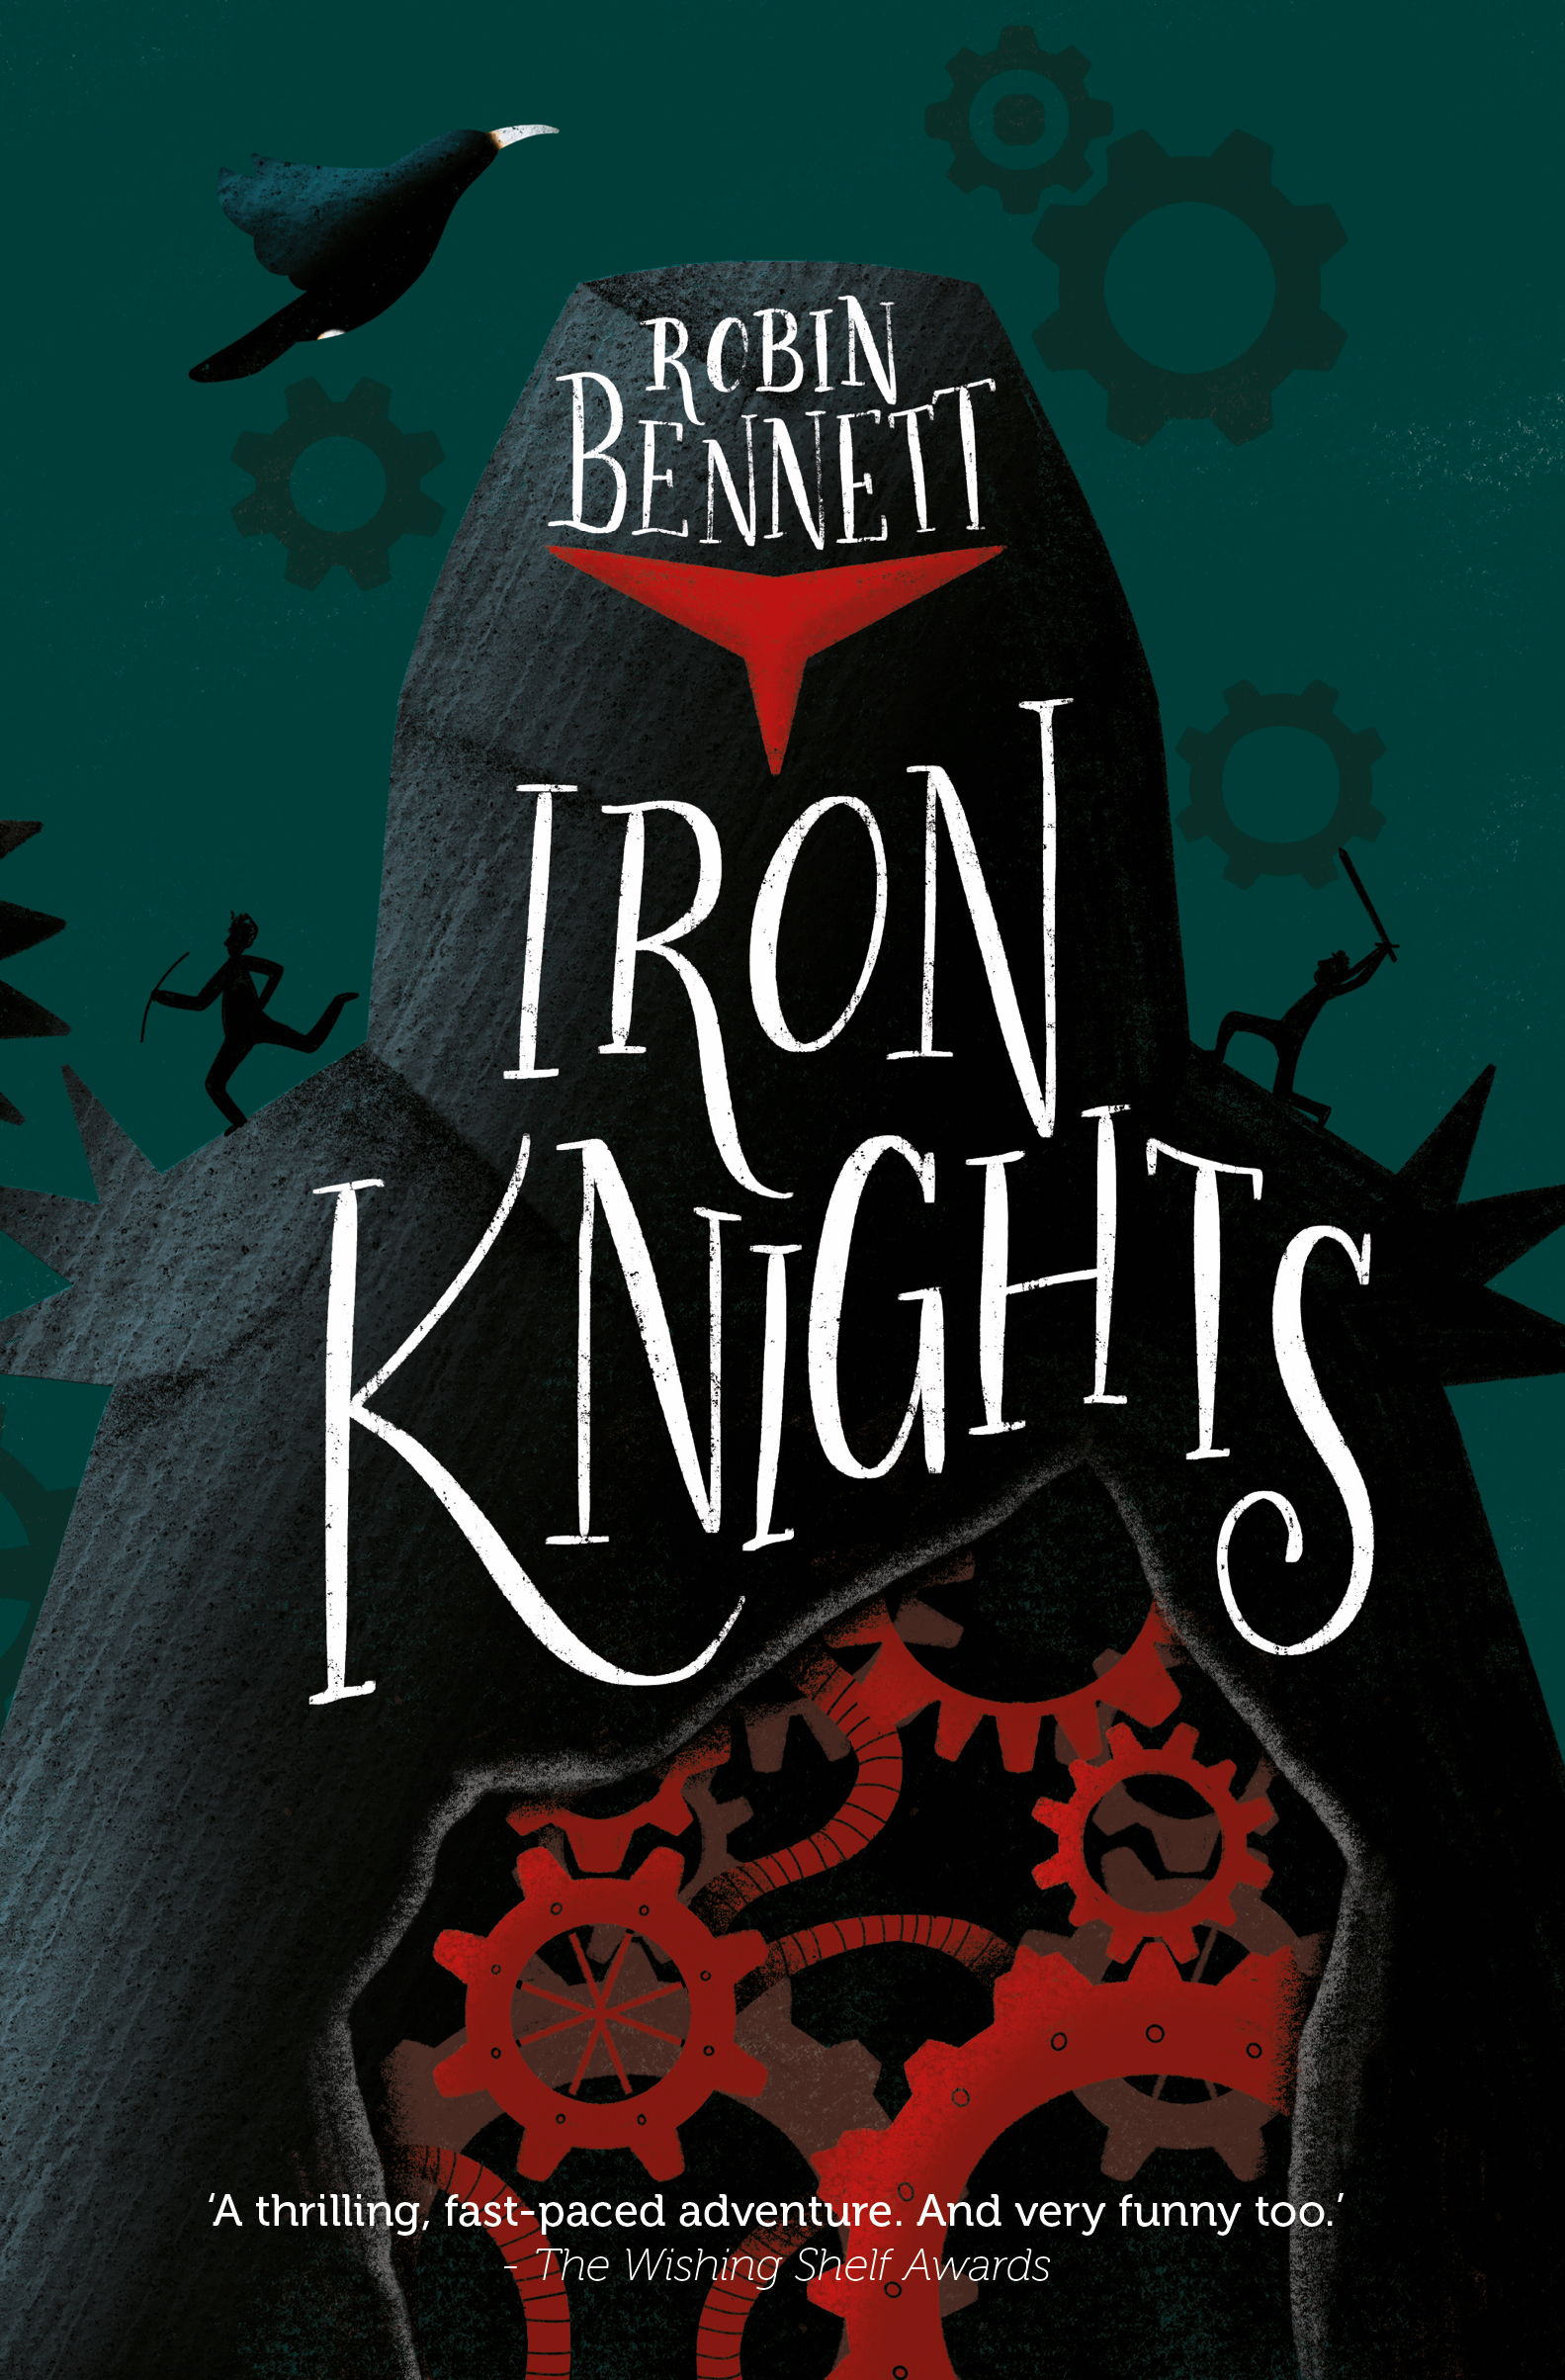 Iron Knights by Robin Bennett